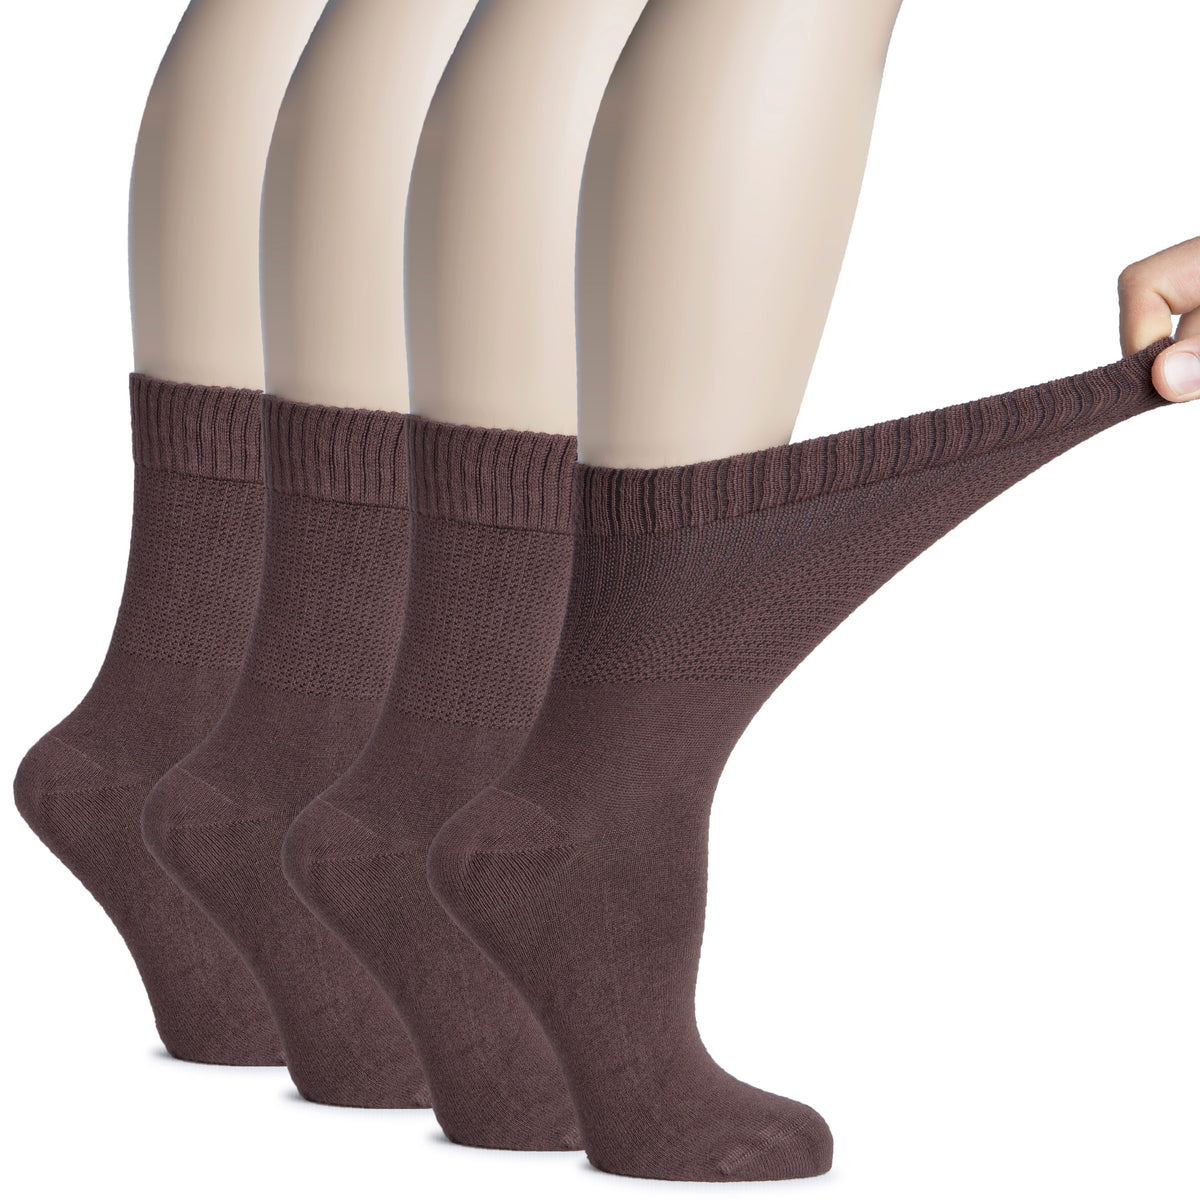 Hugh Ugoli Women's Bamboo Diabetic Crew Thin Socks With Seamless Toe, Soft Socks For Pregnant Women & Elderly People, 4 Pairs | Shoe Size: 9-12 | Light Brown